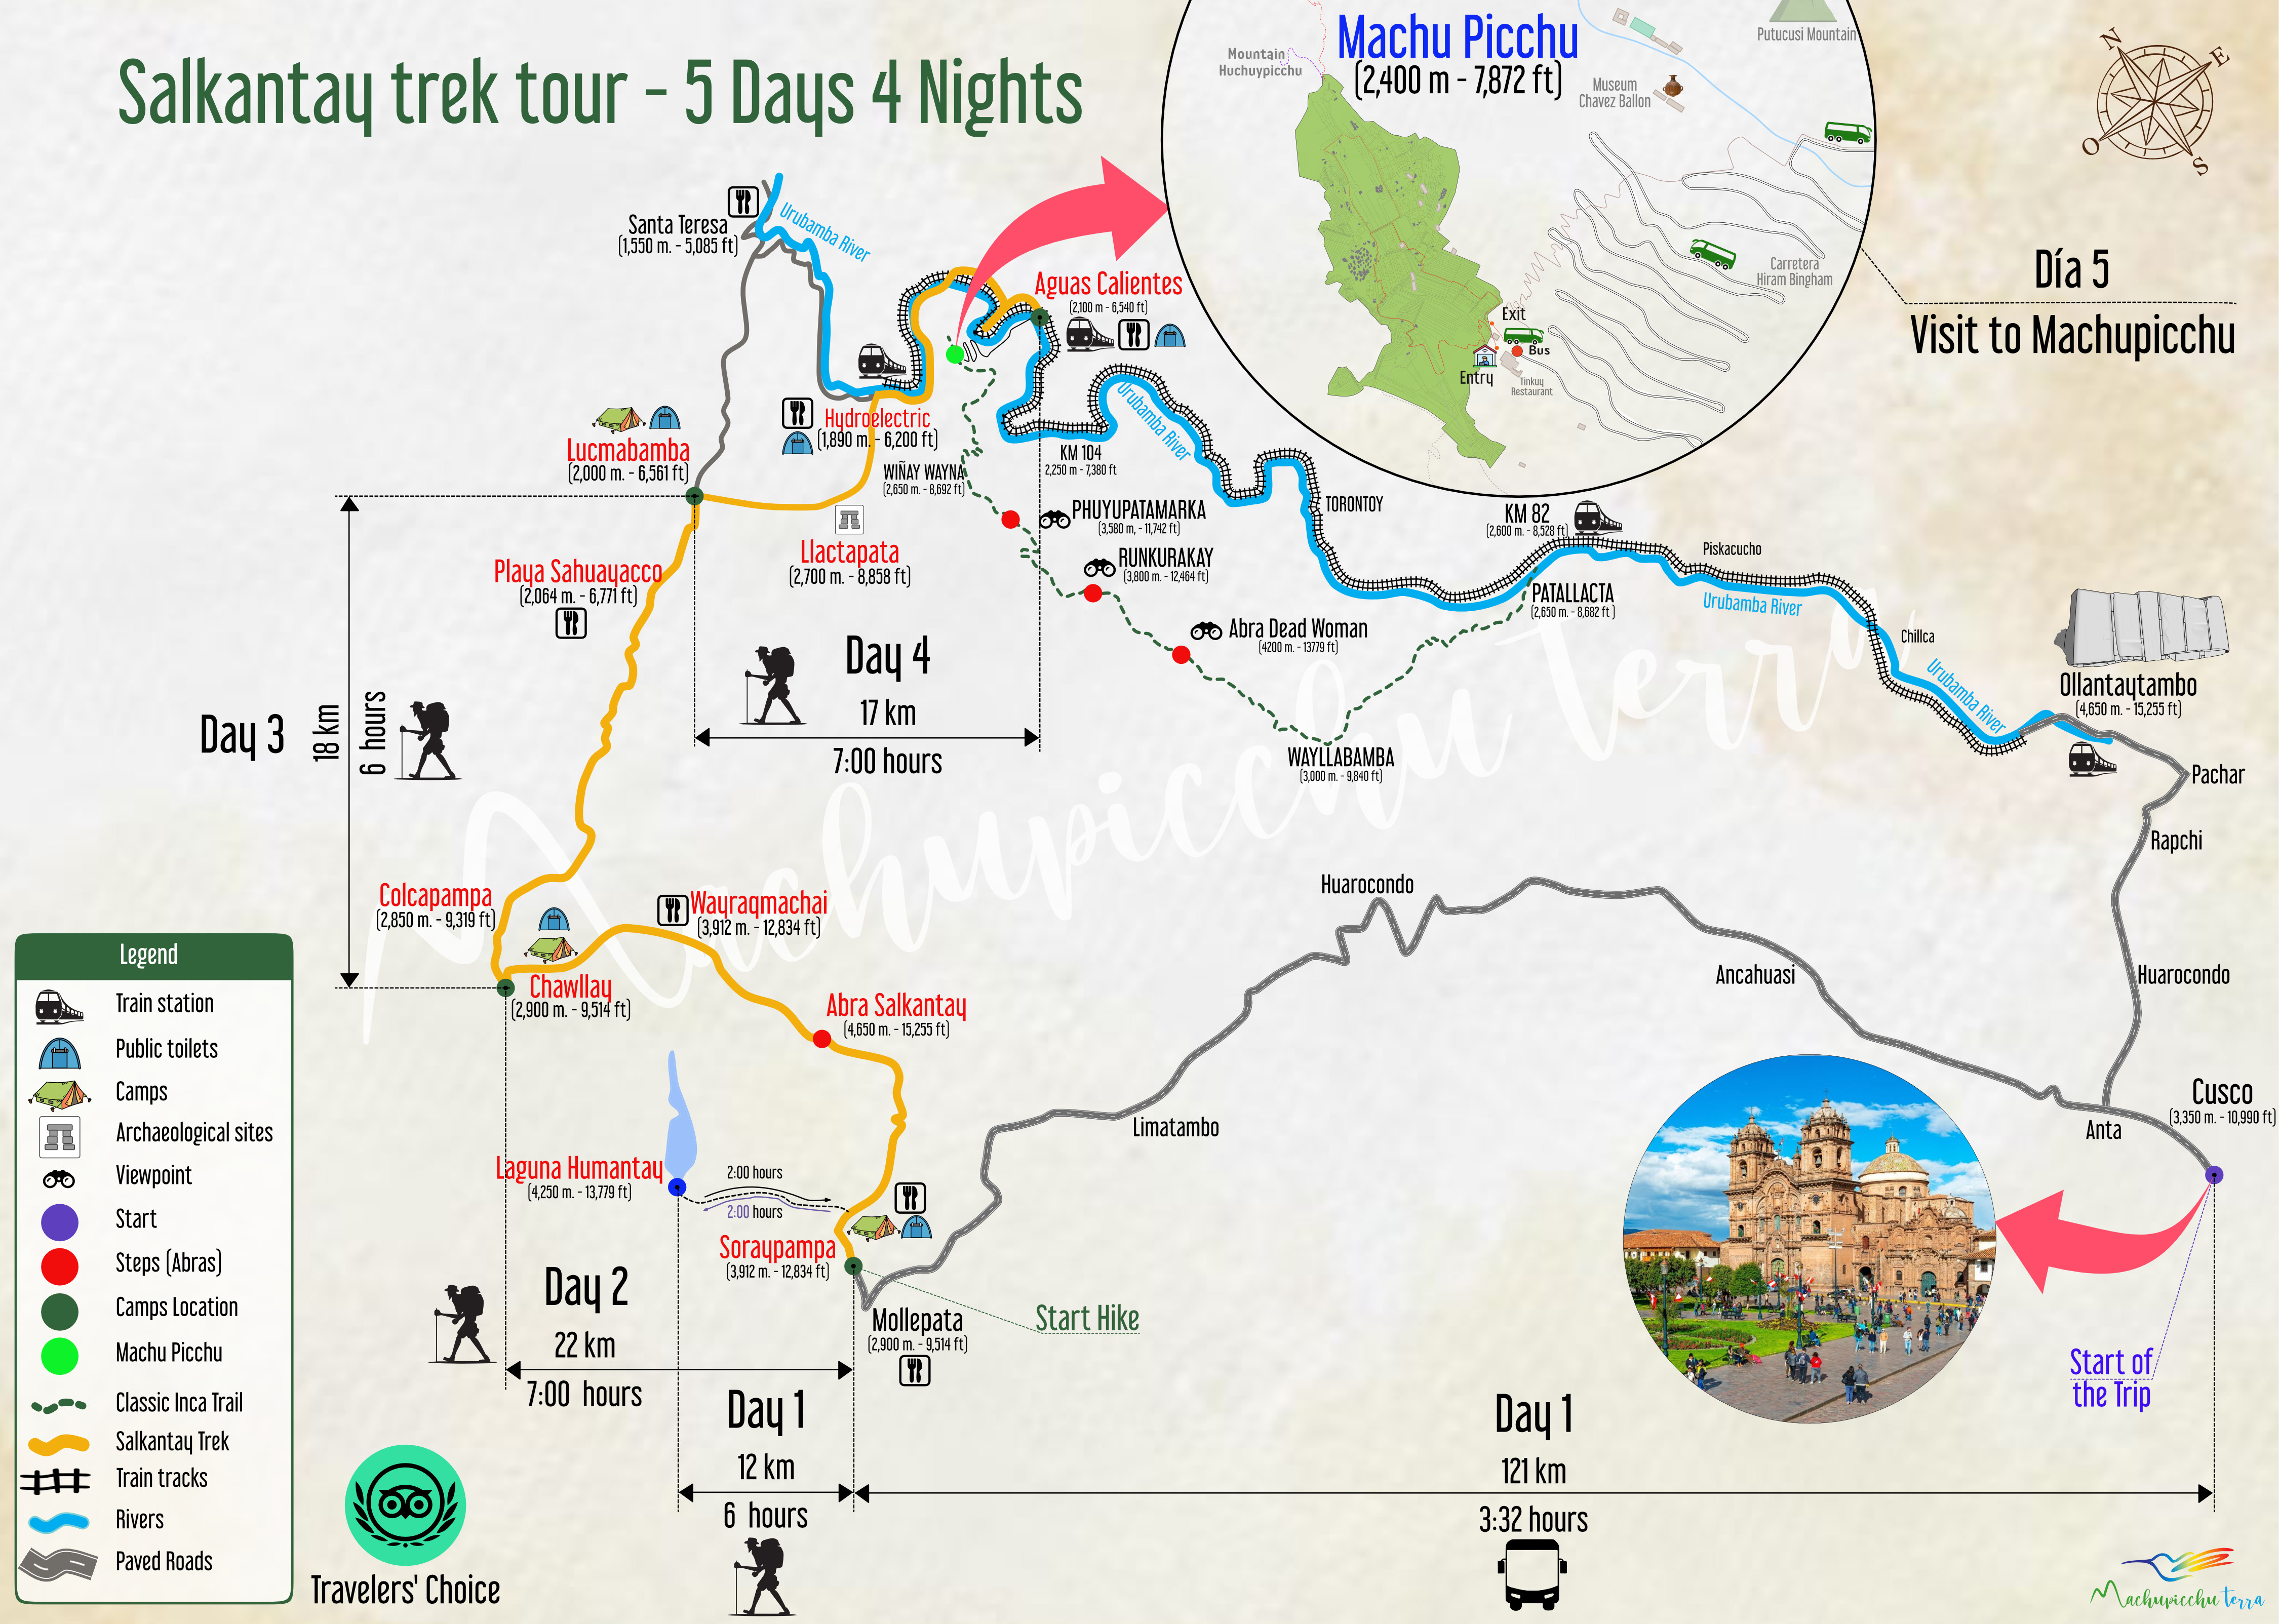 Salkantay trek tour of 5 days to Machu Picchu